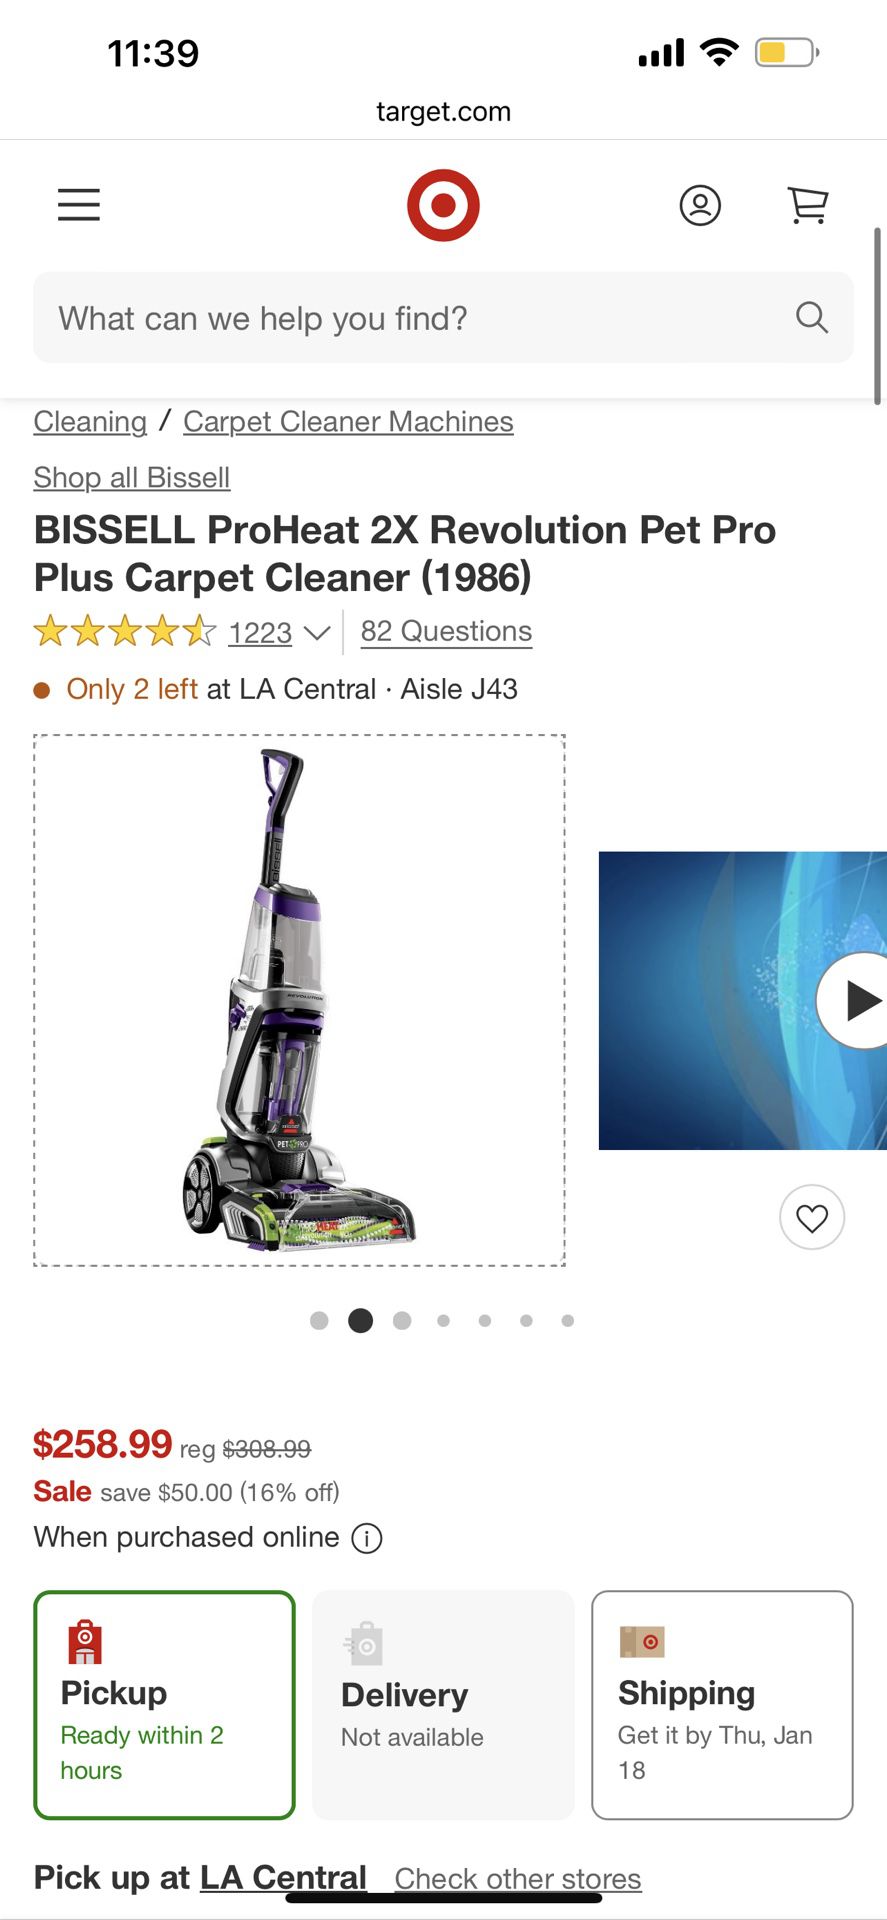 BISSELL ProHeat 2X Revolution Pet Pro Plus Carpet Cleaner (1986)